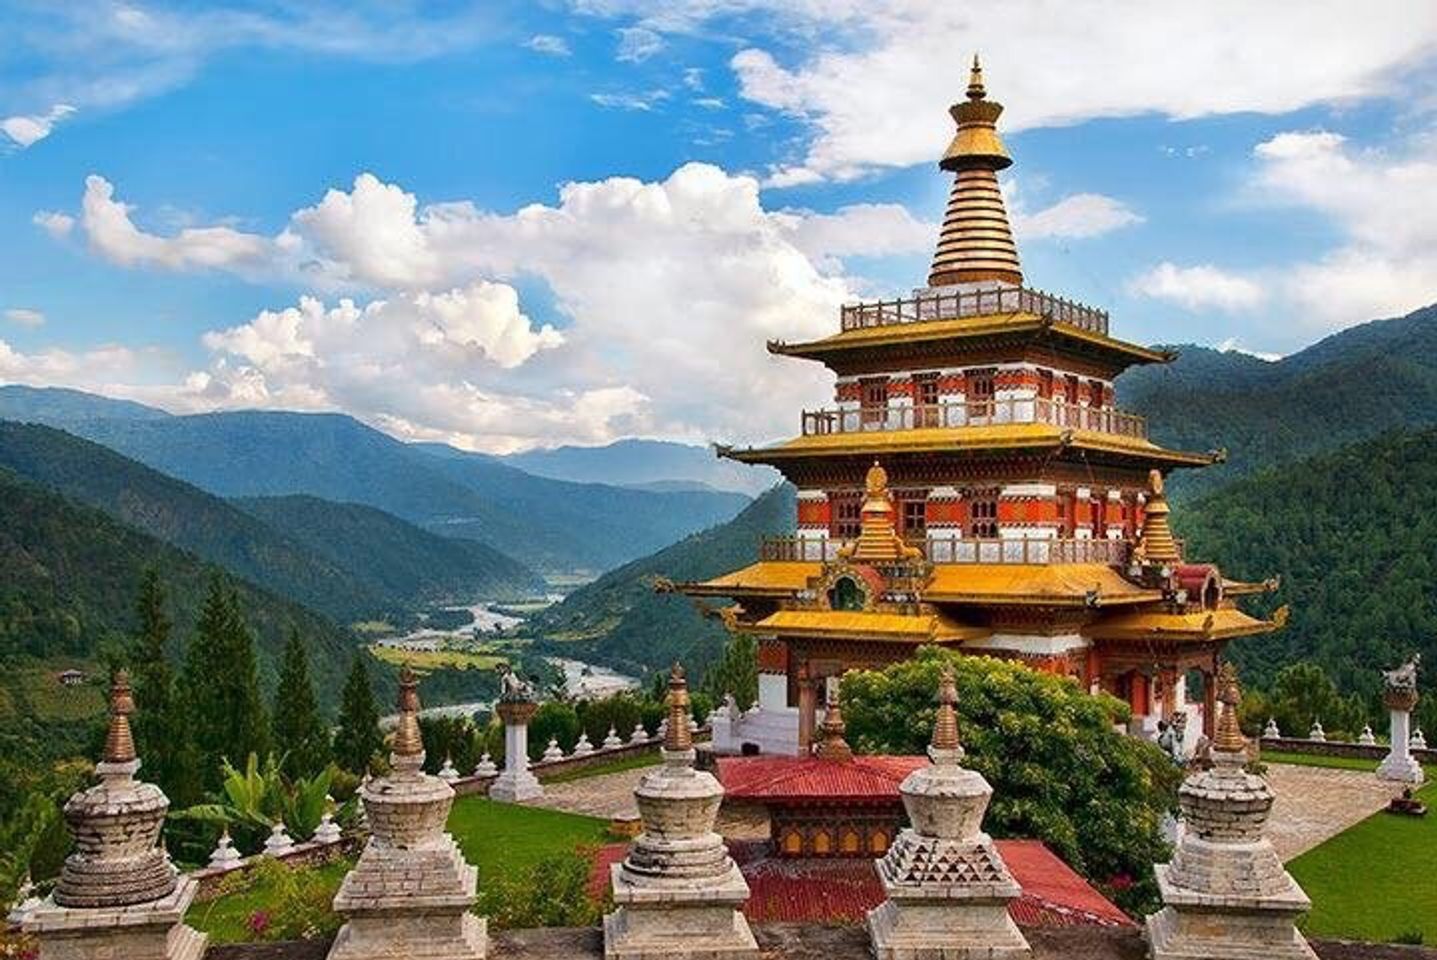 Caminata celestial: Explora el majestuoso Khamsum Yulley Namgyal Chorten en Punakha, Bután